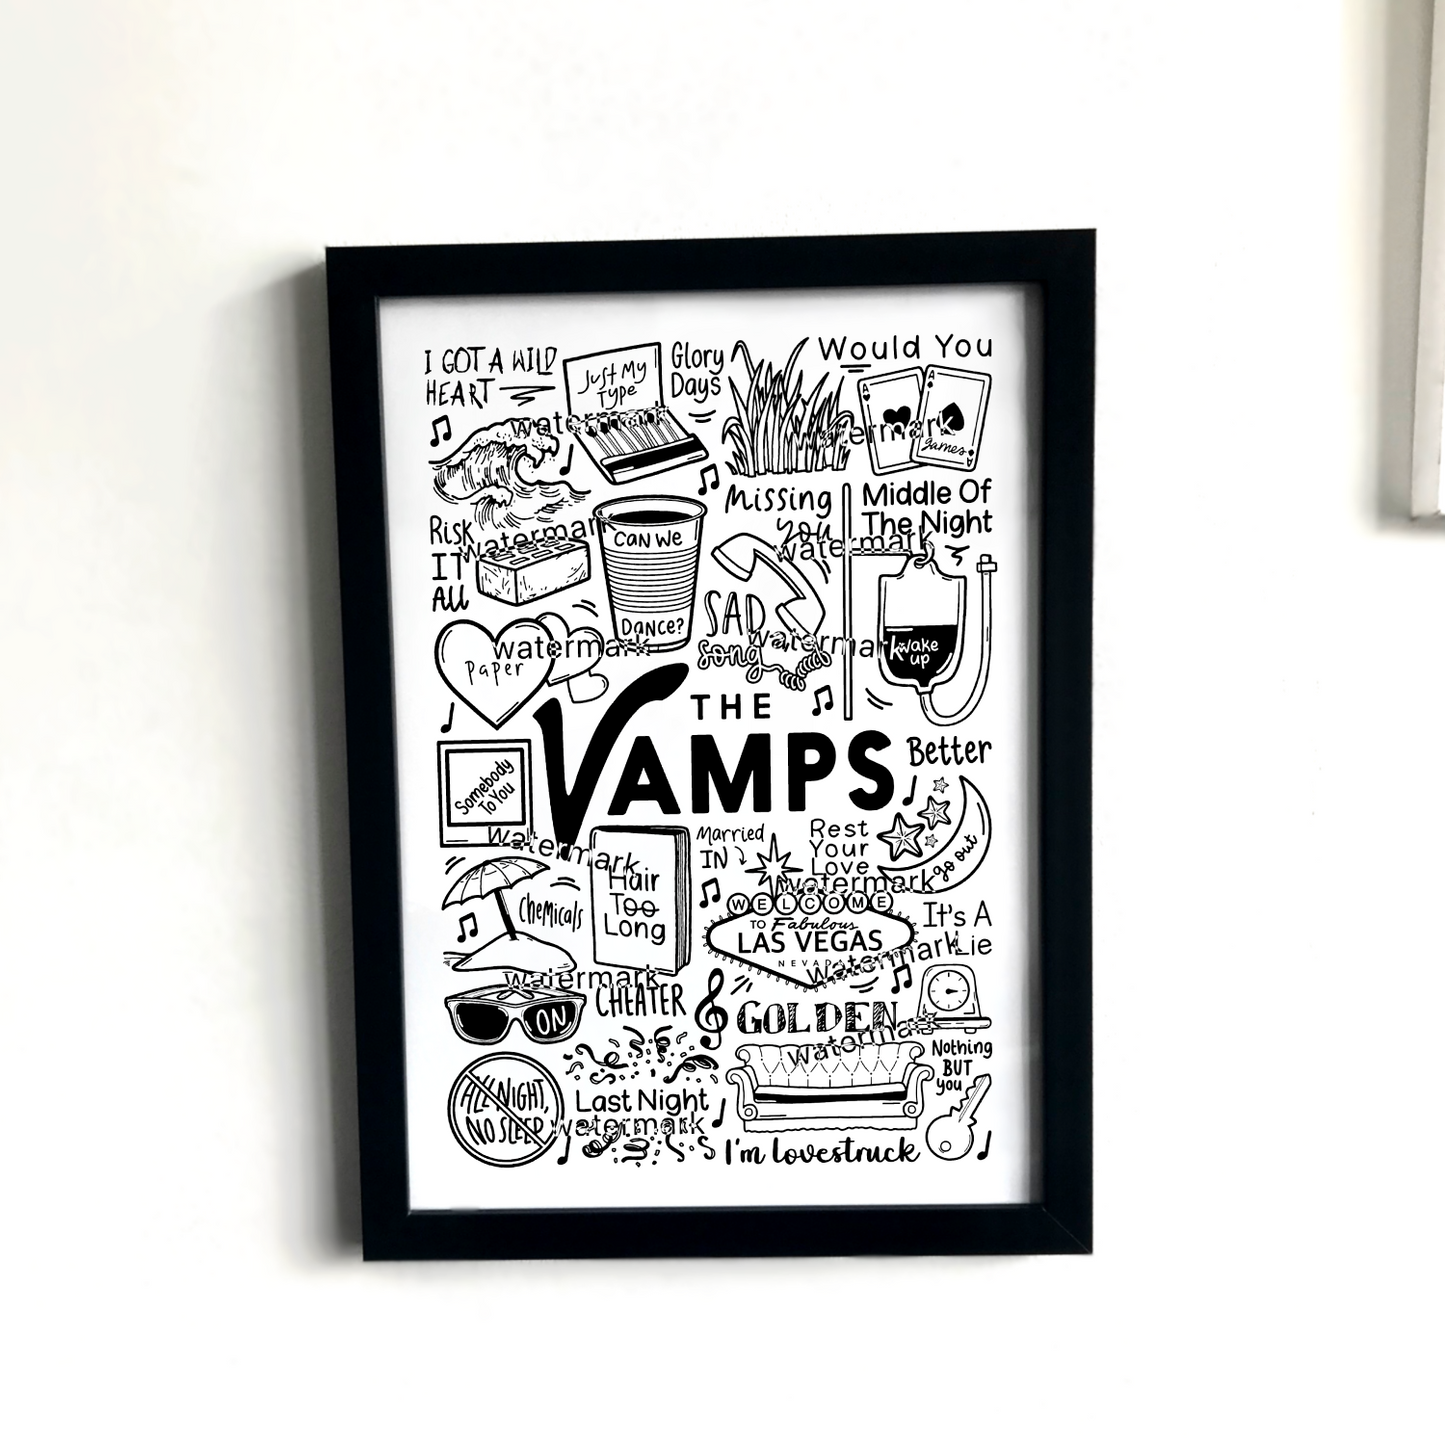 The Vamps print